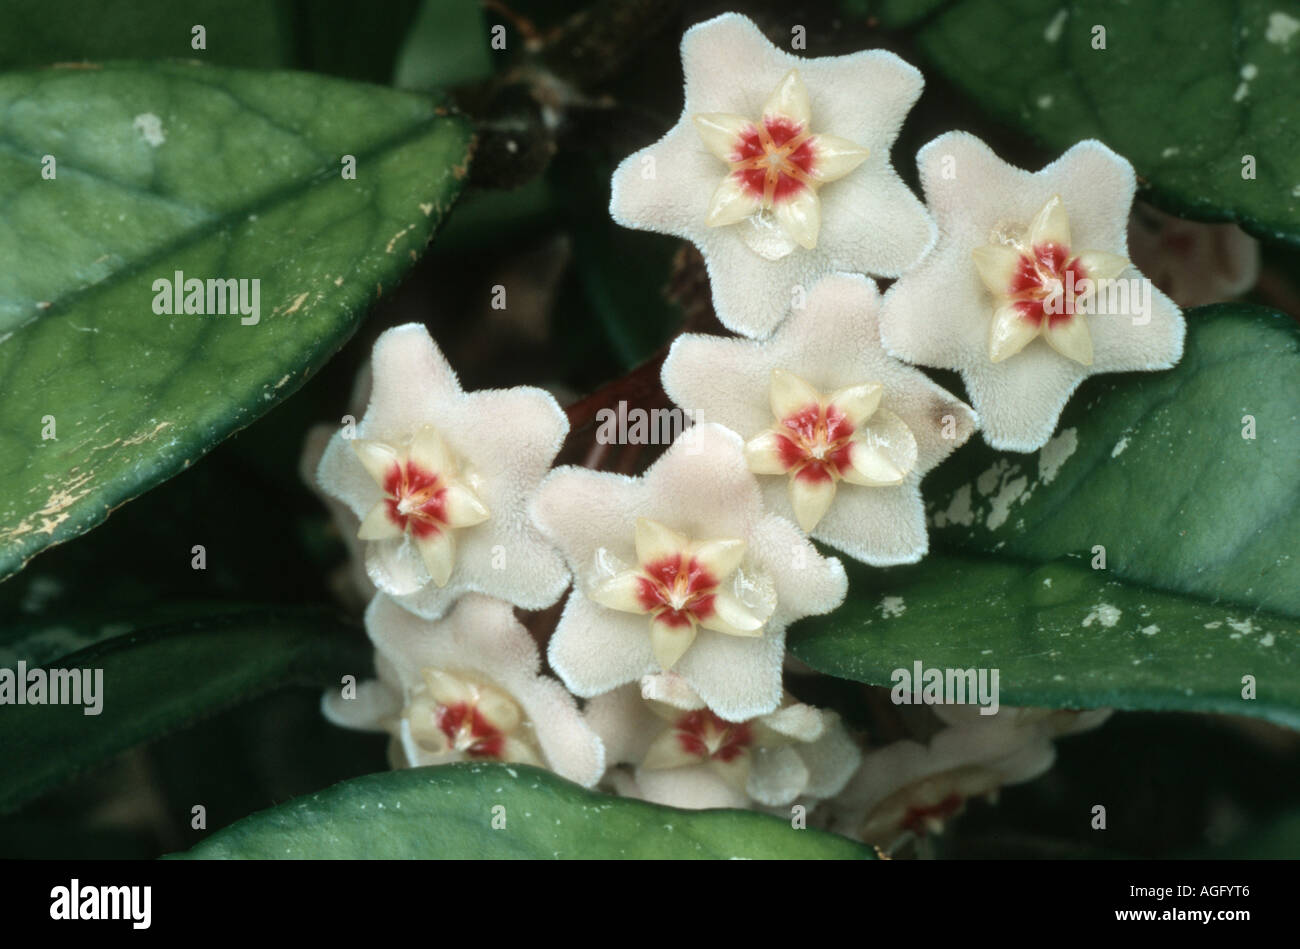 Wax Plant, Wax Flower, Porcelain Flower (Hoya carnosa), flowers Stock Photo